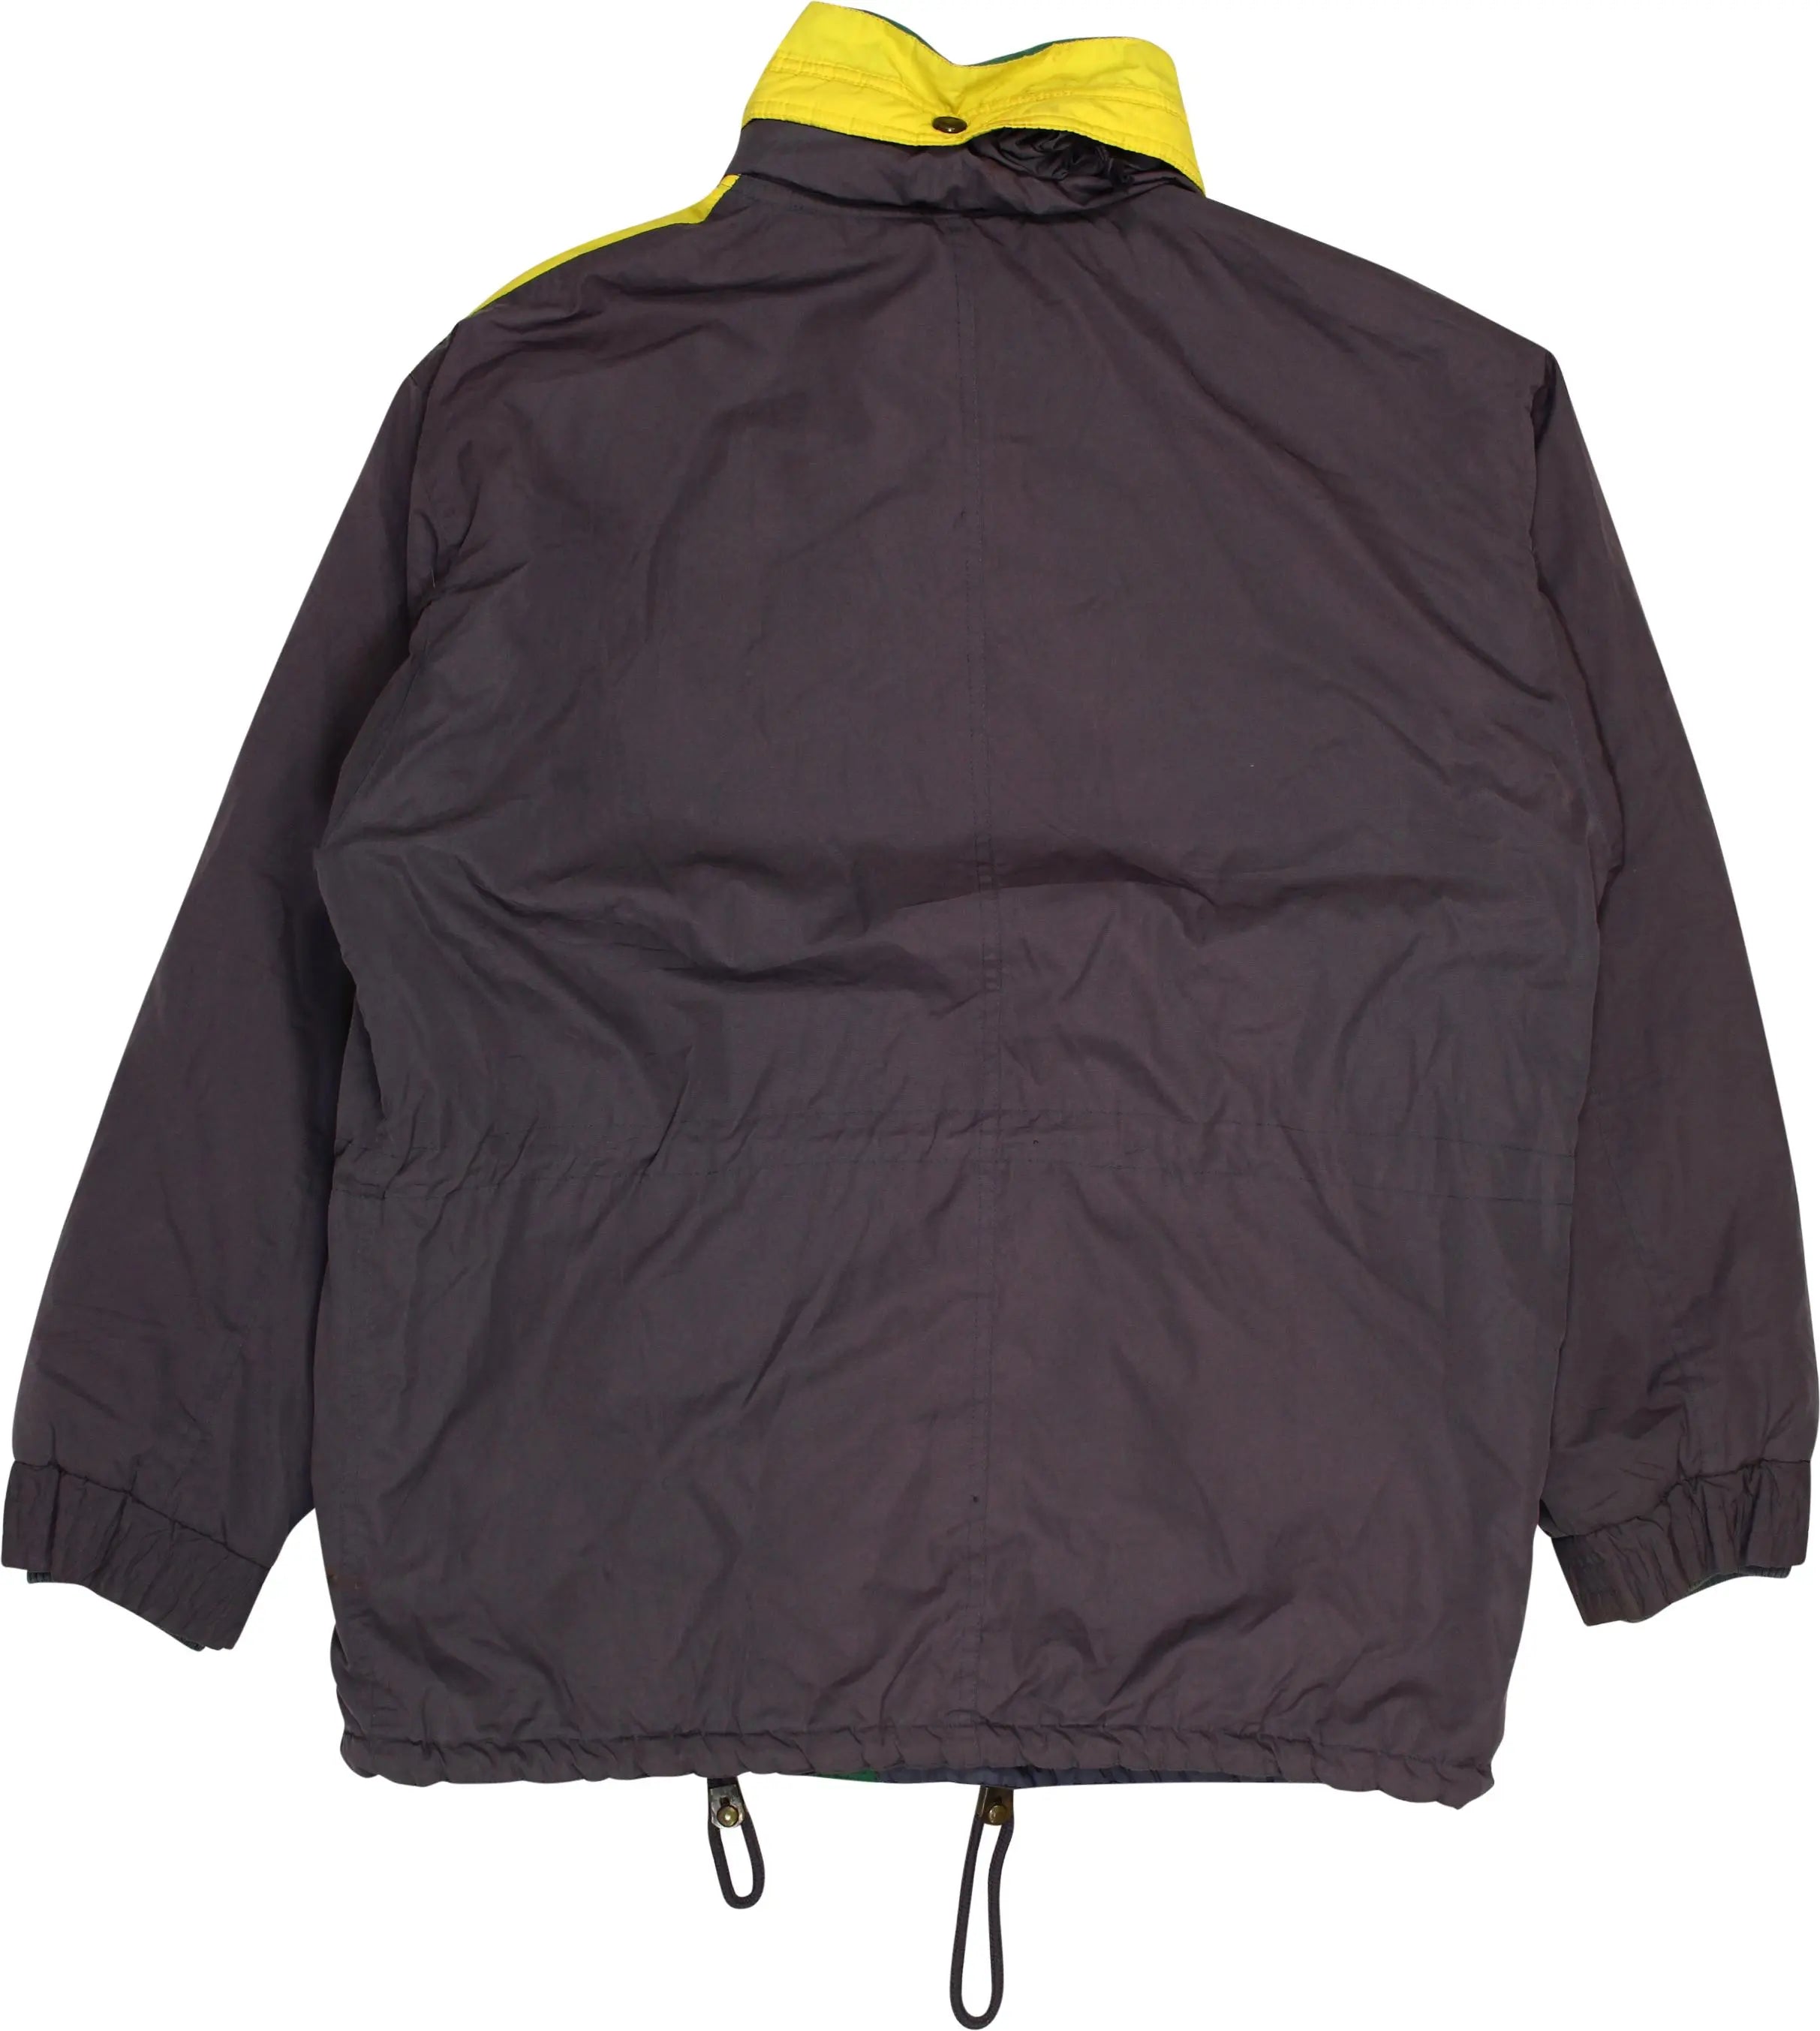 Cerruti 1881 Sport - Sport jacket- ThriftTale.com - Vintage and second handclothing